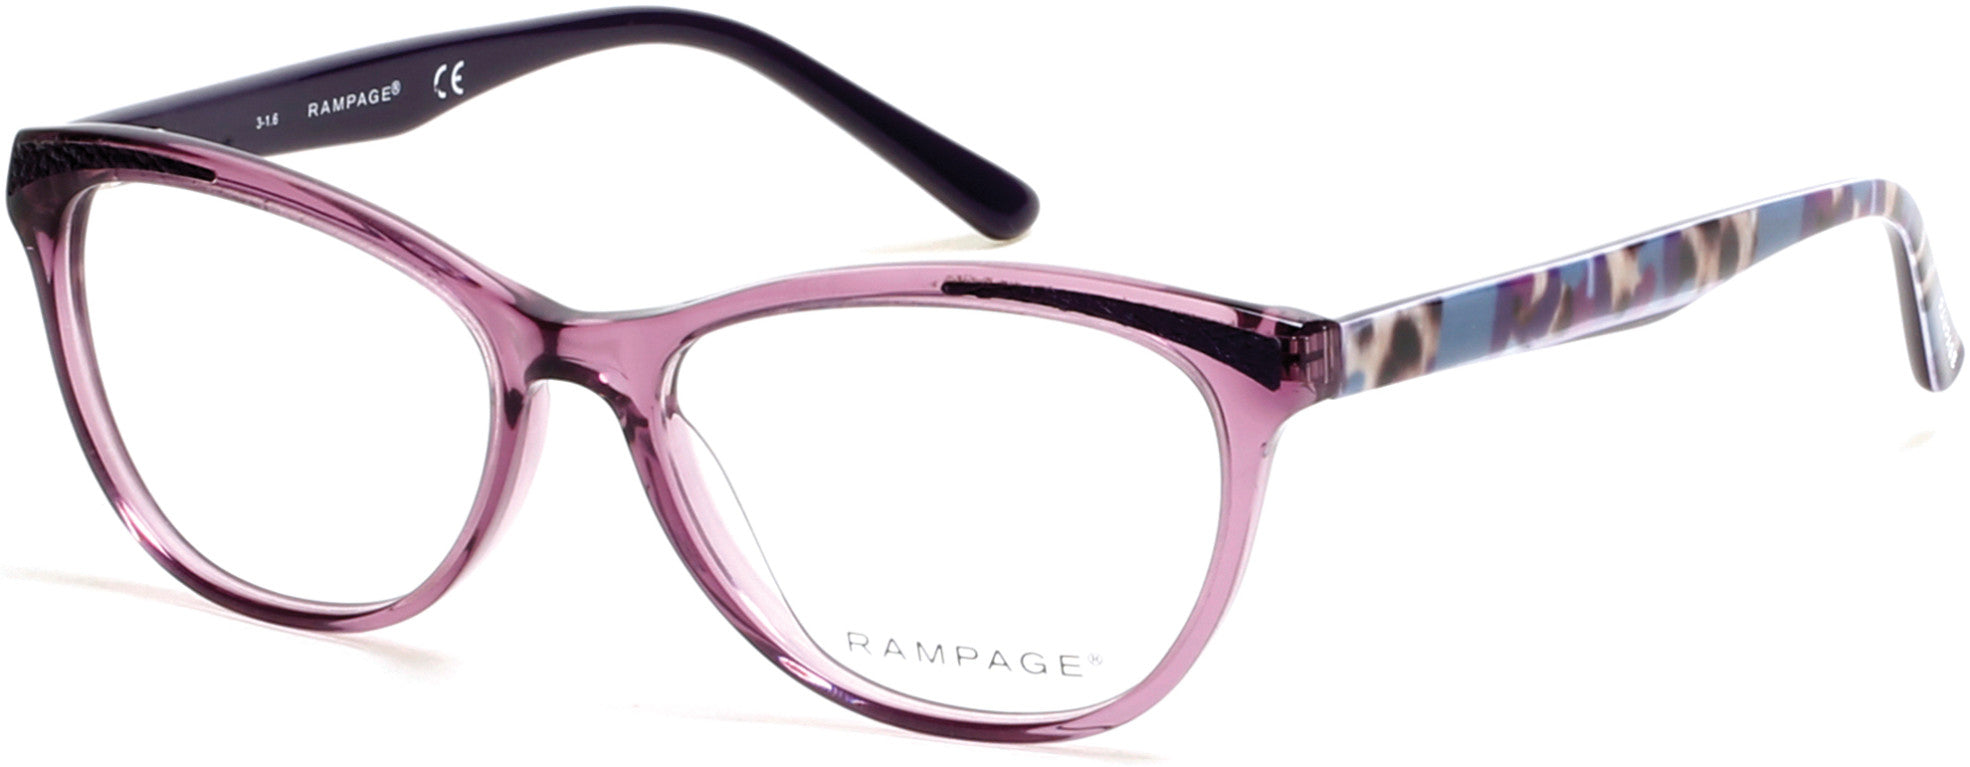 Rampage Cat RA0205 Eyeglasses 081-081 - Shiny Violet